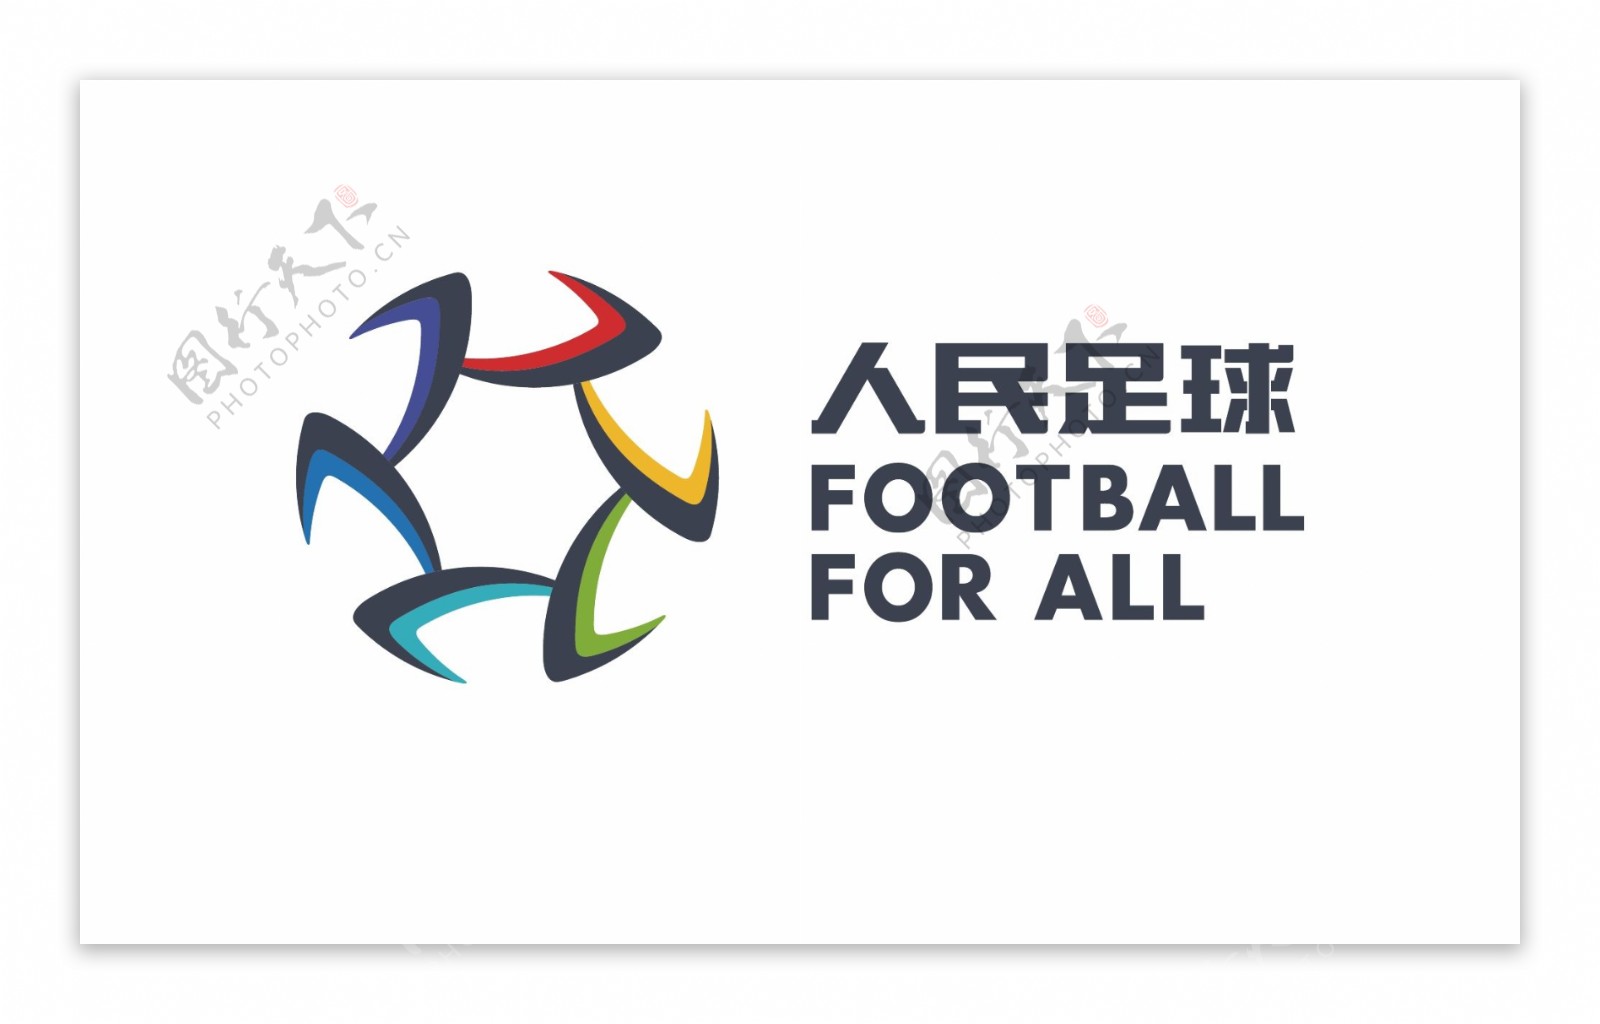 人民足球logo